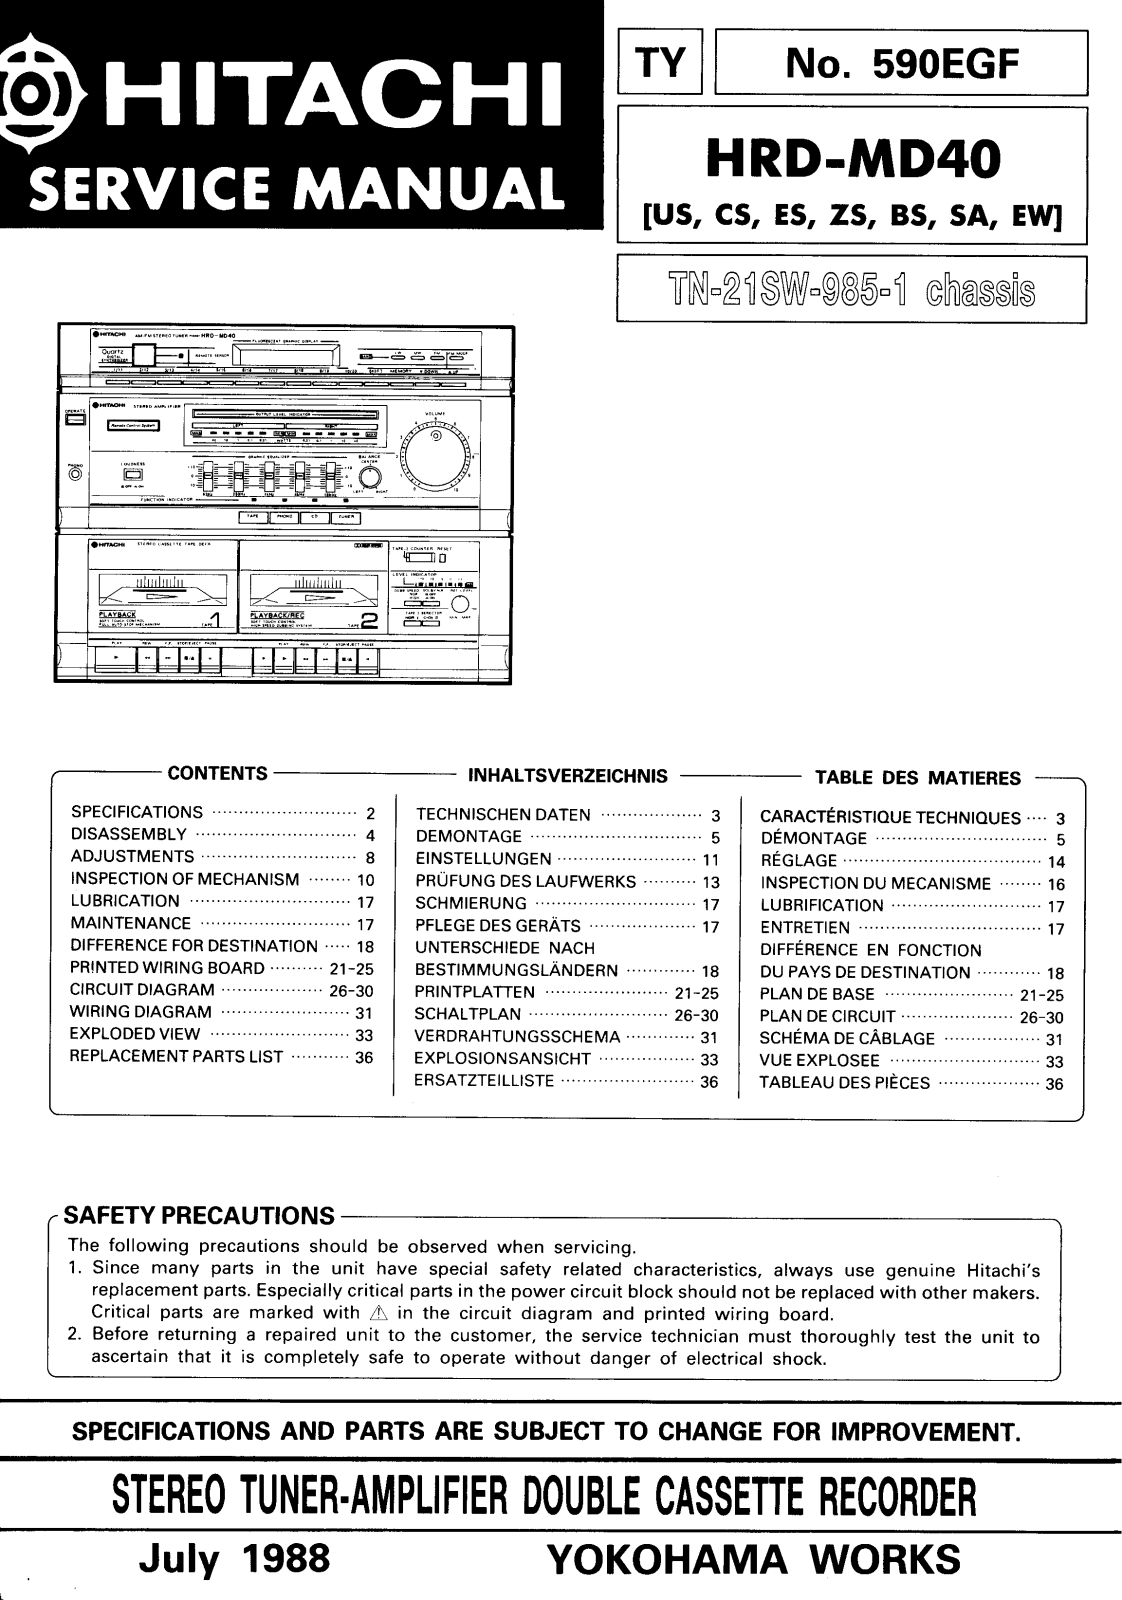 Hitachi HRD-MD40 Service Manual